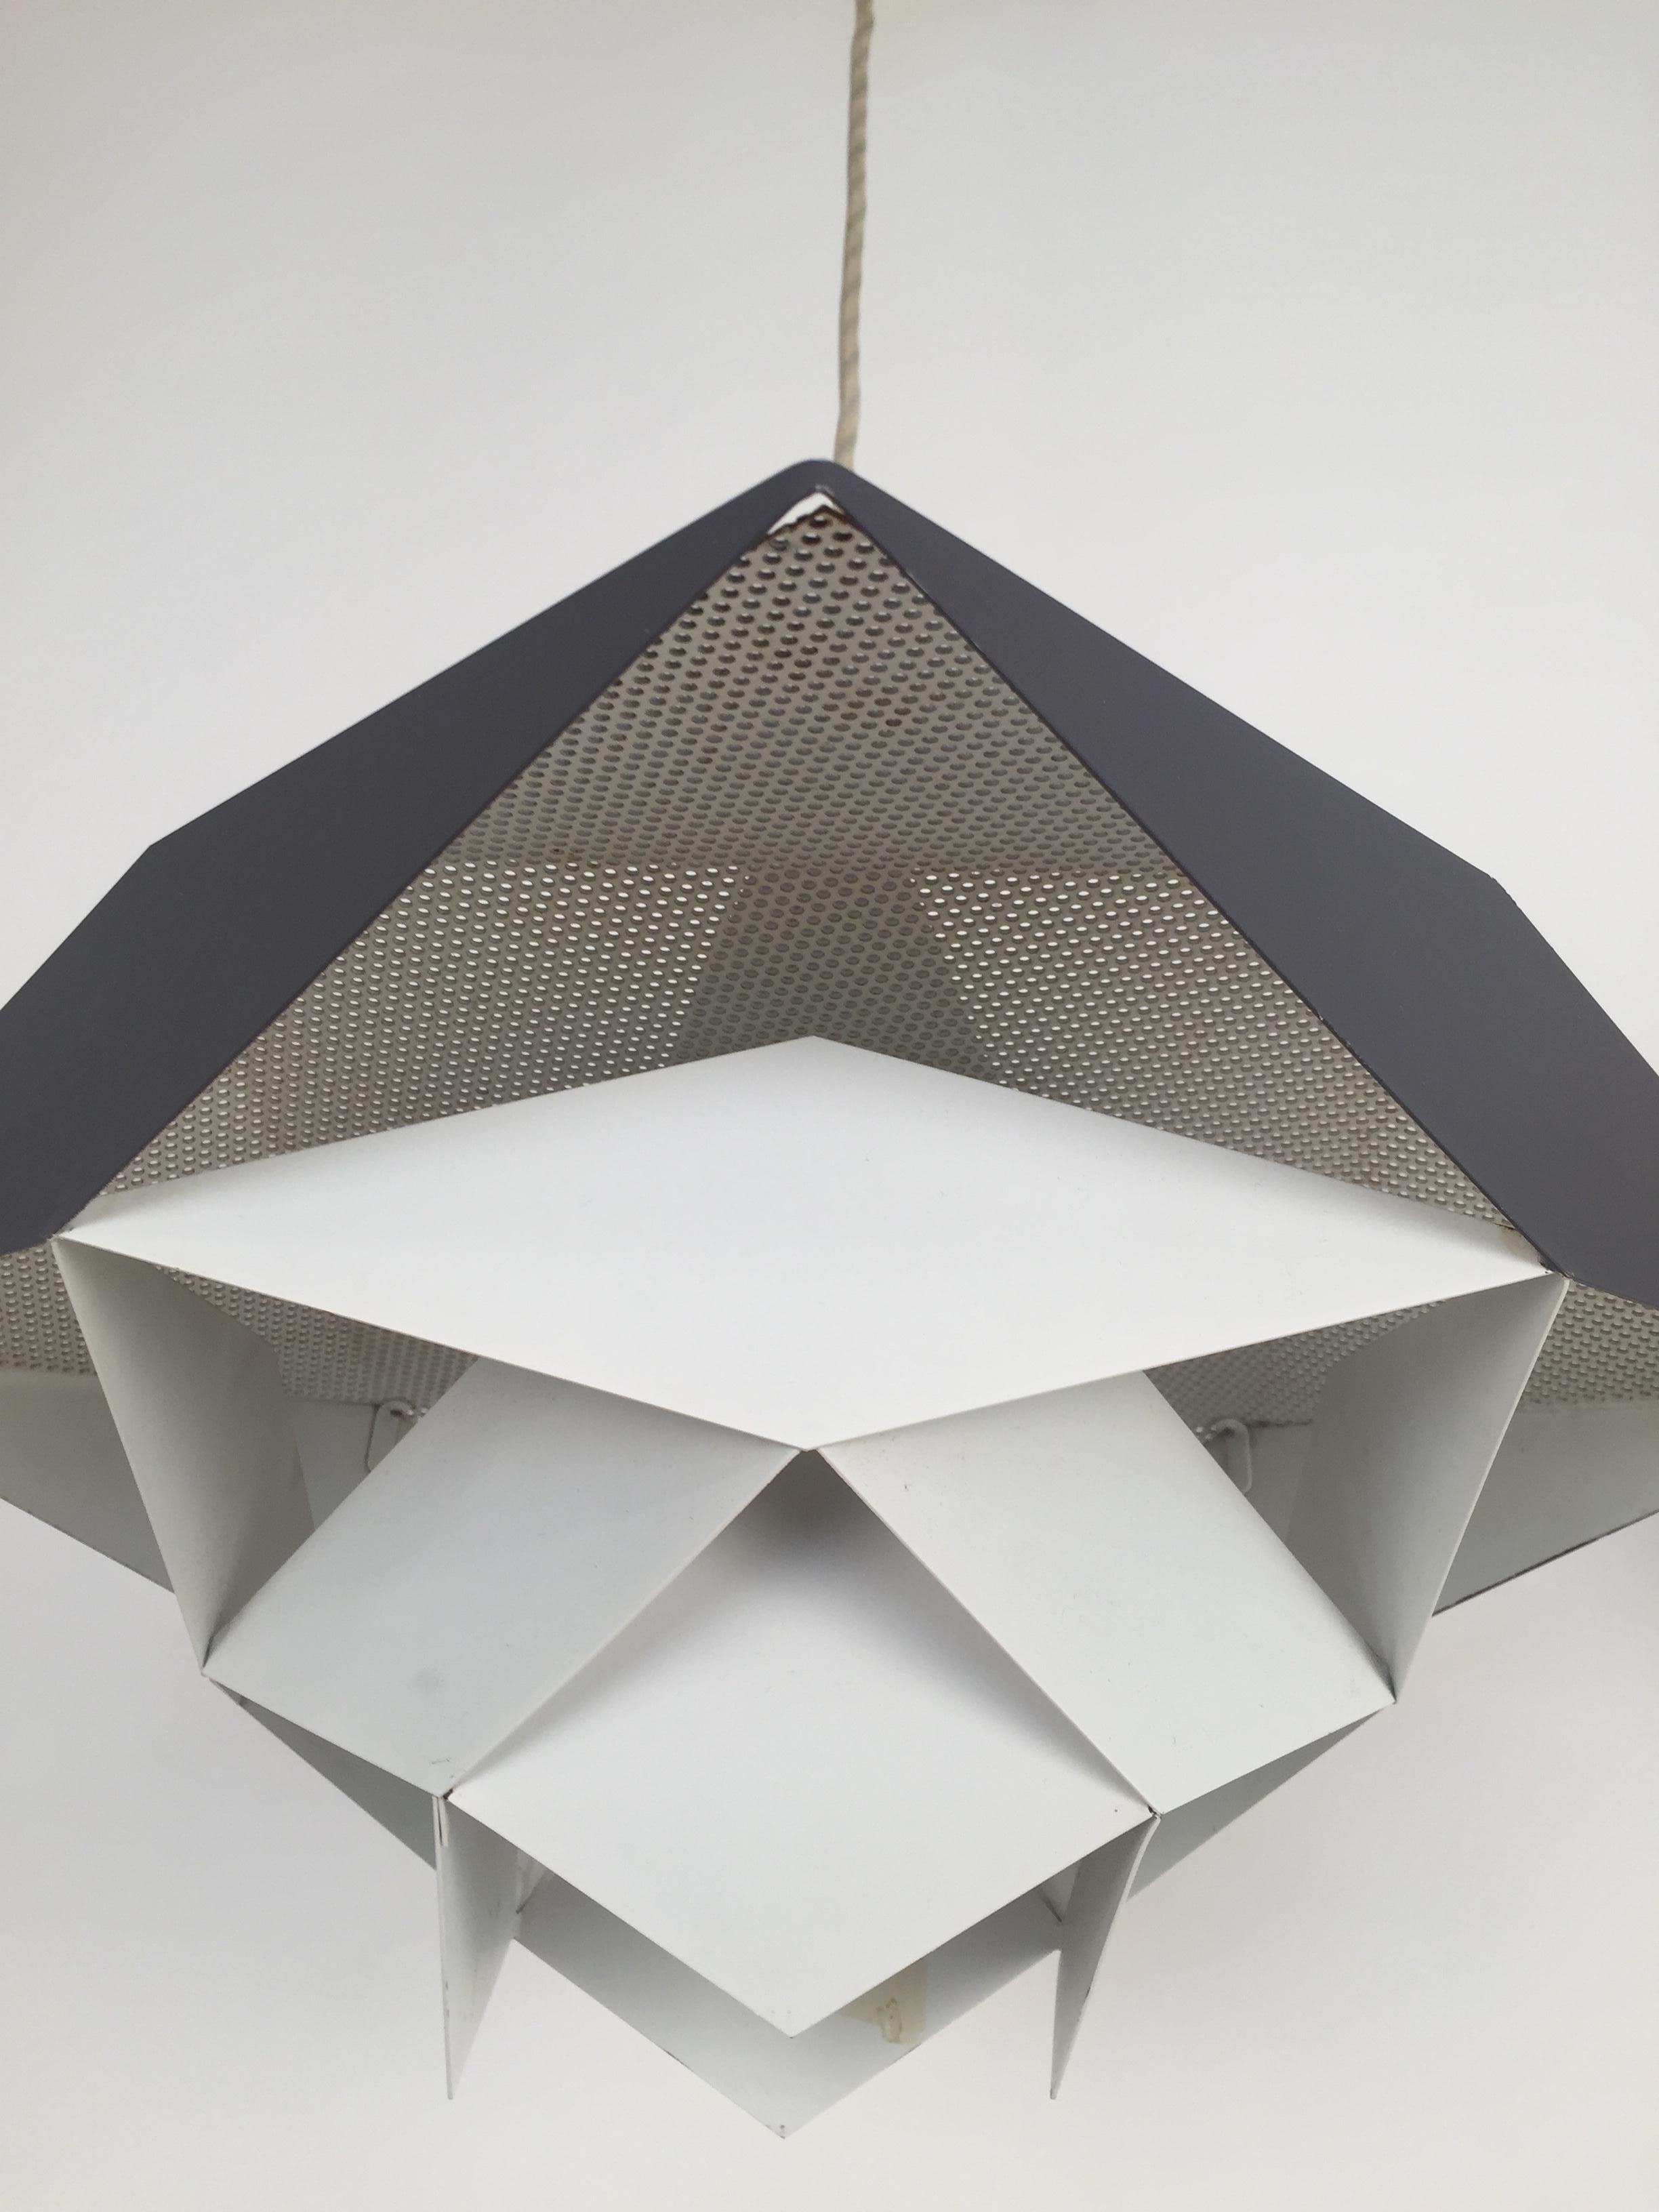 Preben Dahl Pair of Ceiling Lamps Model “Sinfoni” by Hans Folsgaard, 1960 For Sale 1